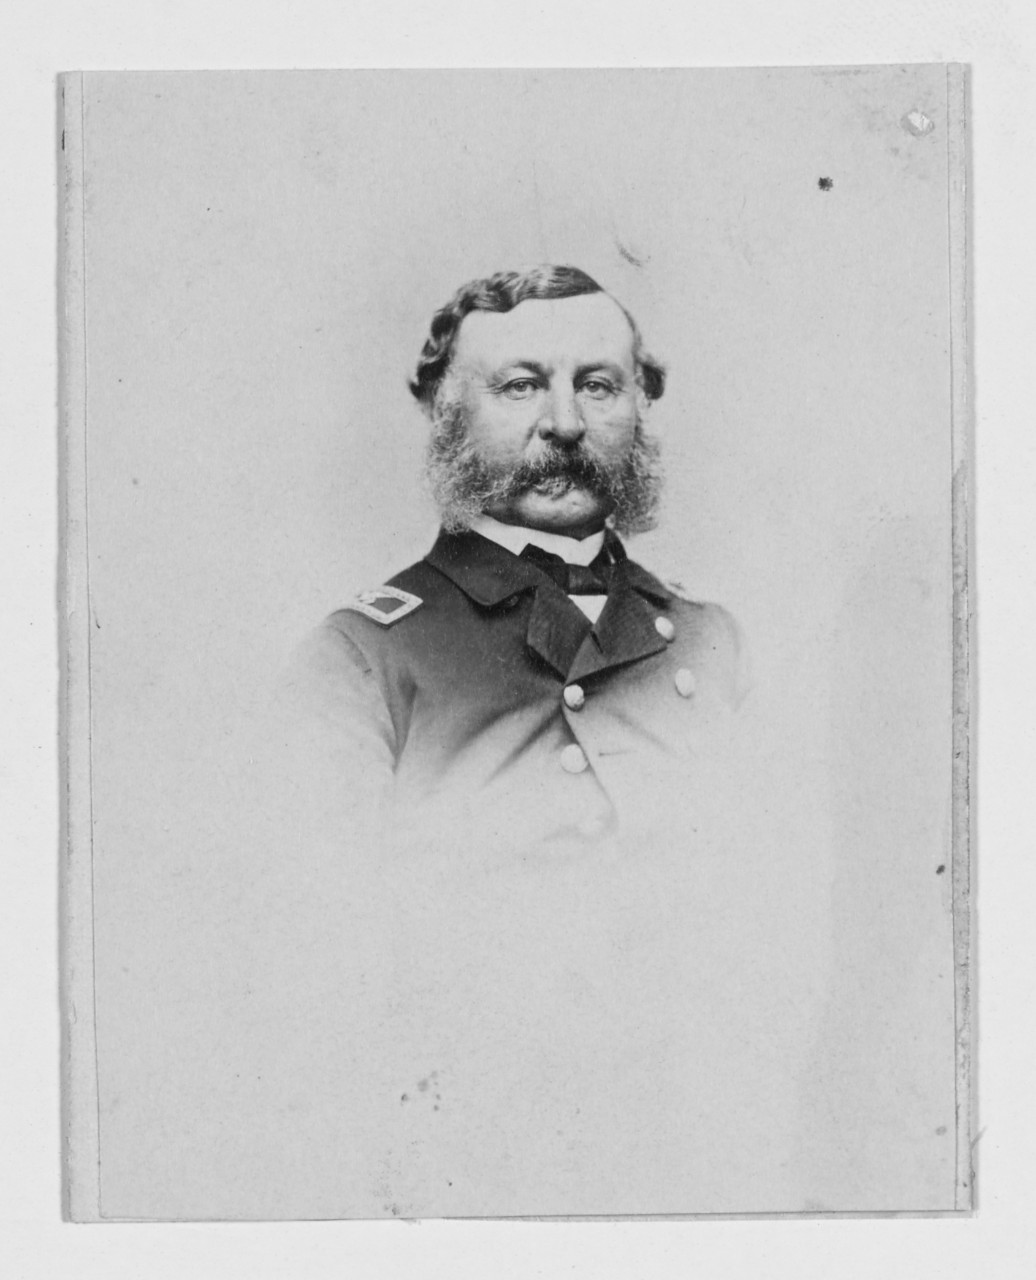 Captain Charles Steedman, USN